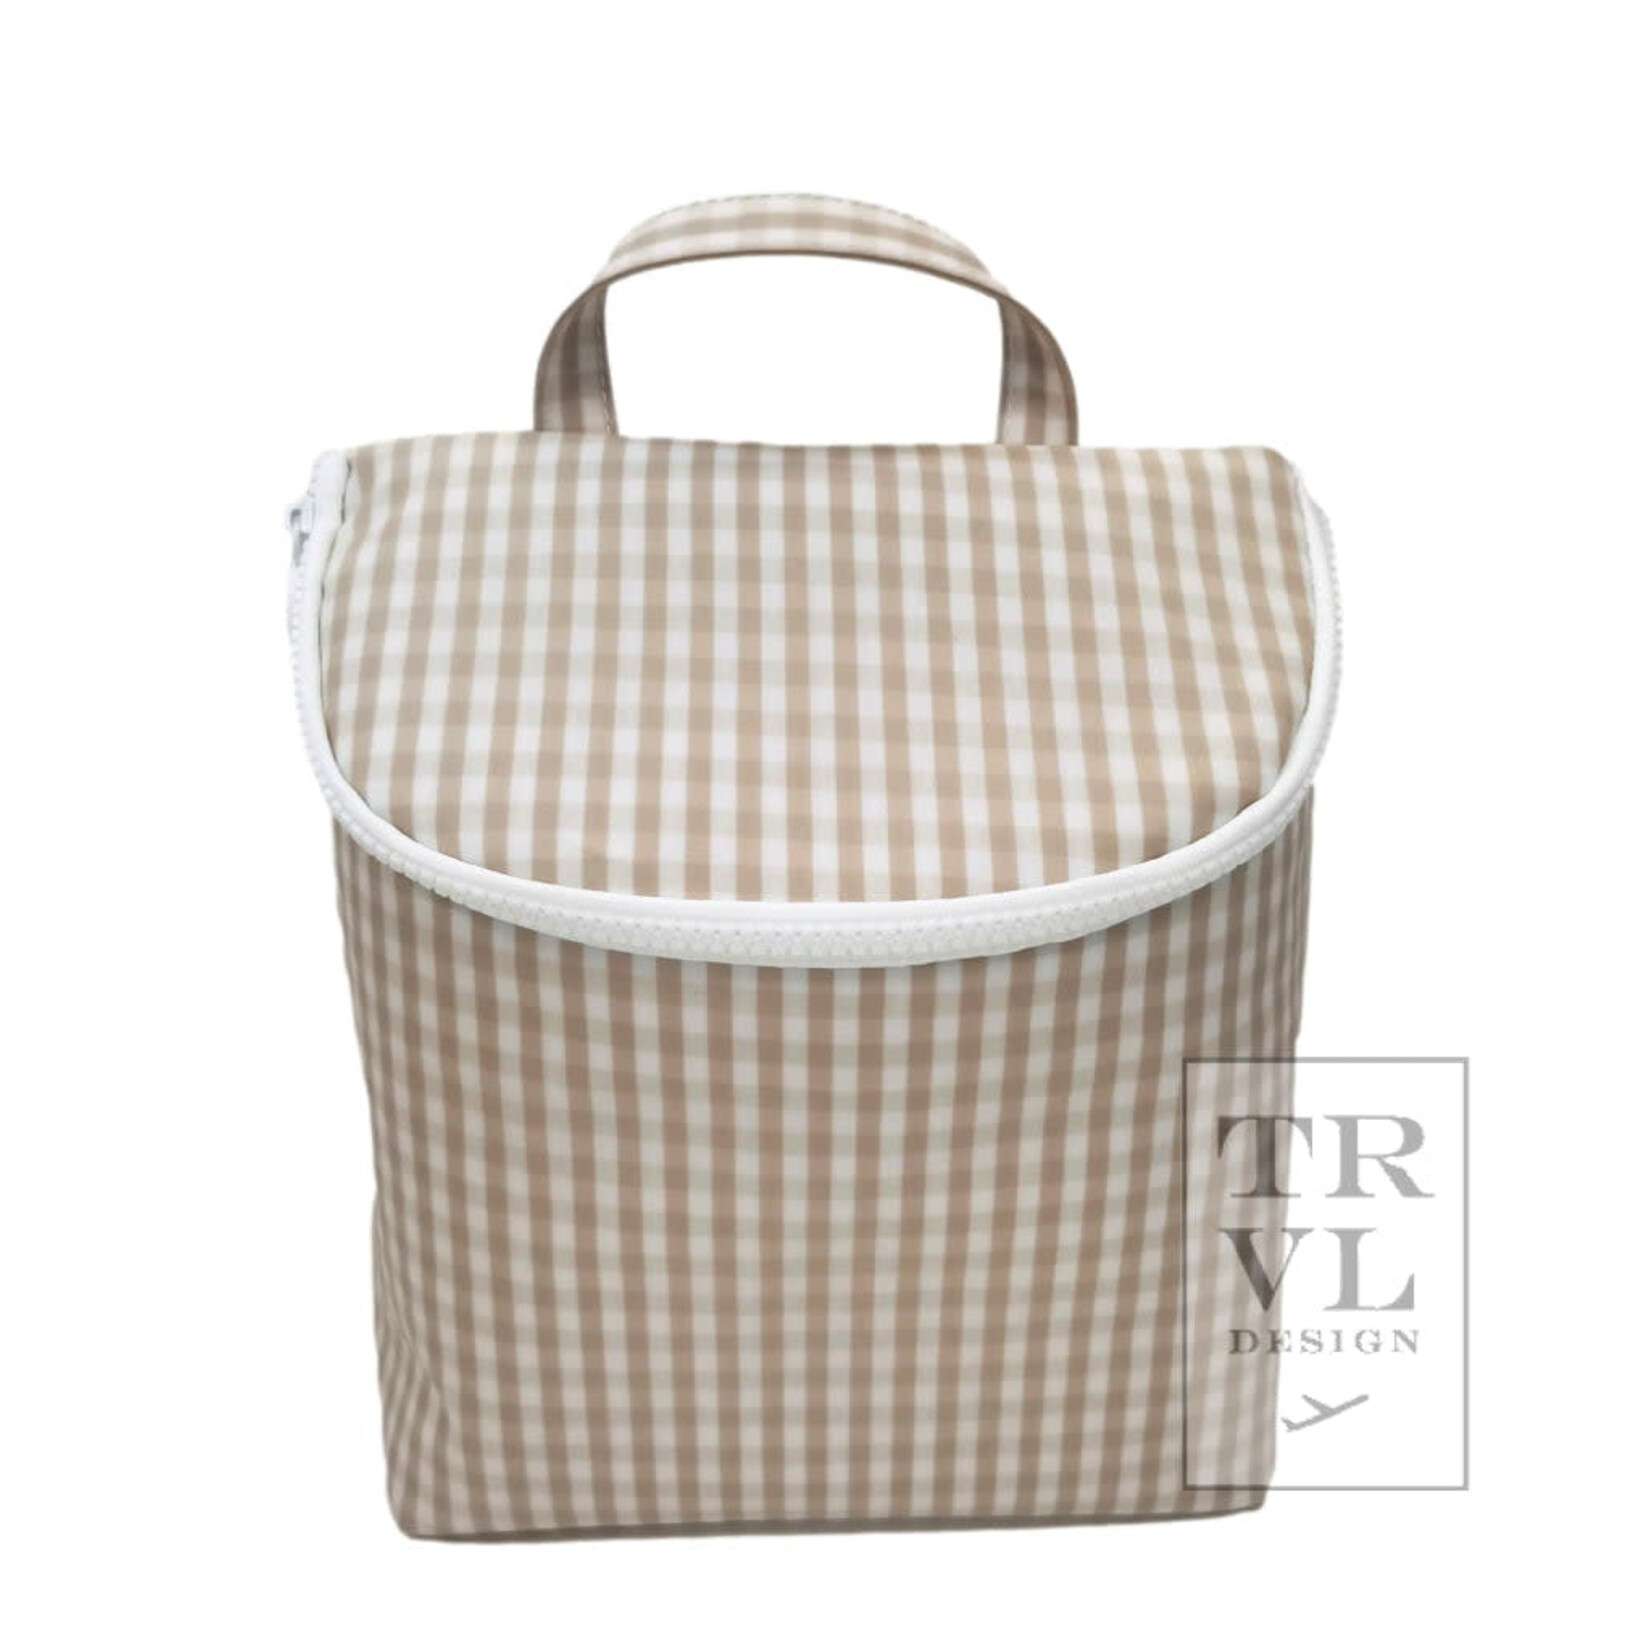 TRVL Design Take Away Insulated Bag - Gingham Khaki